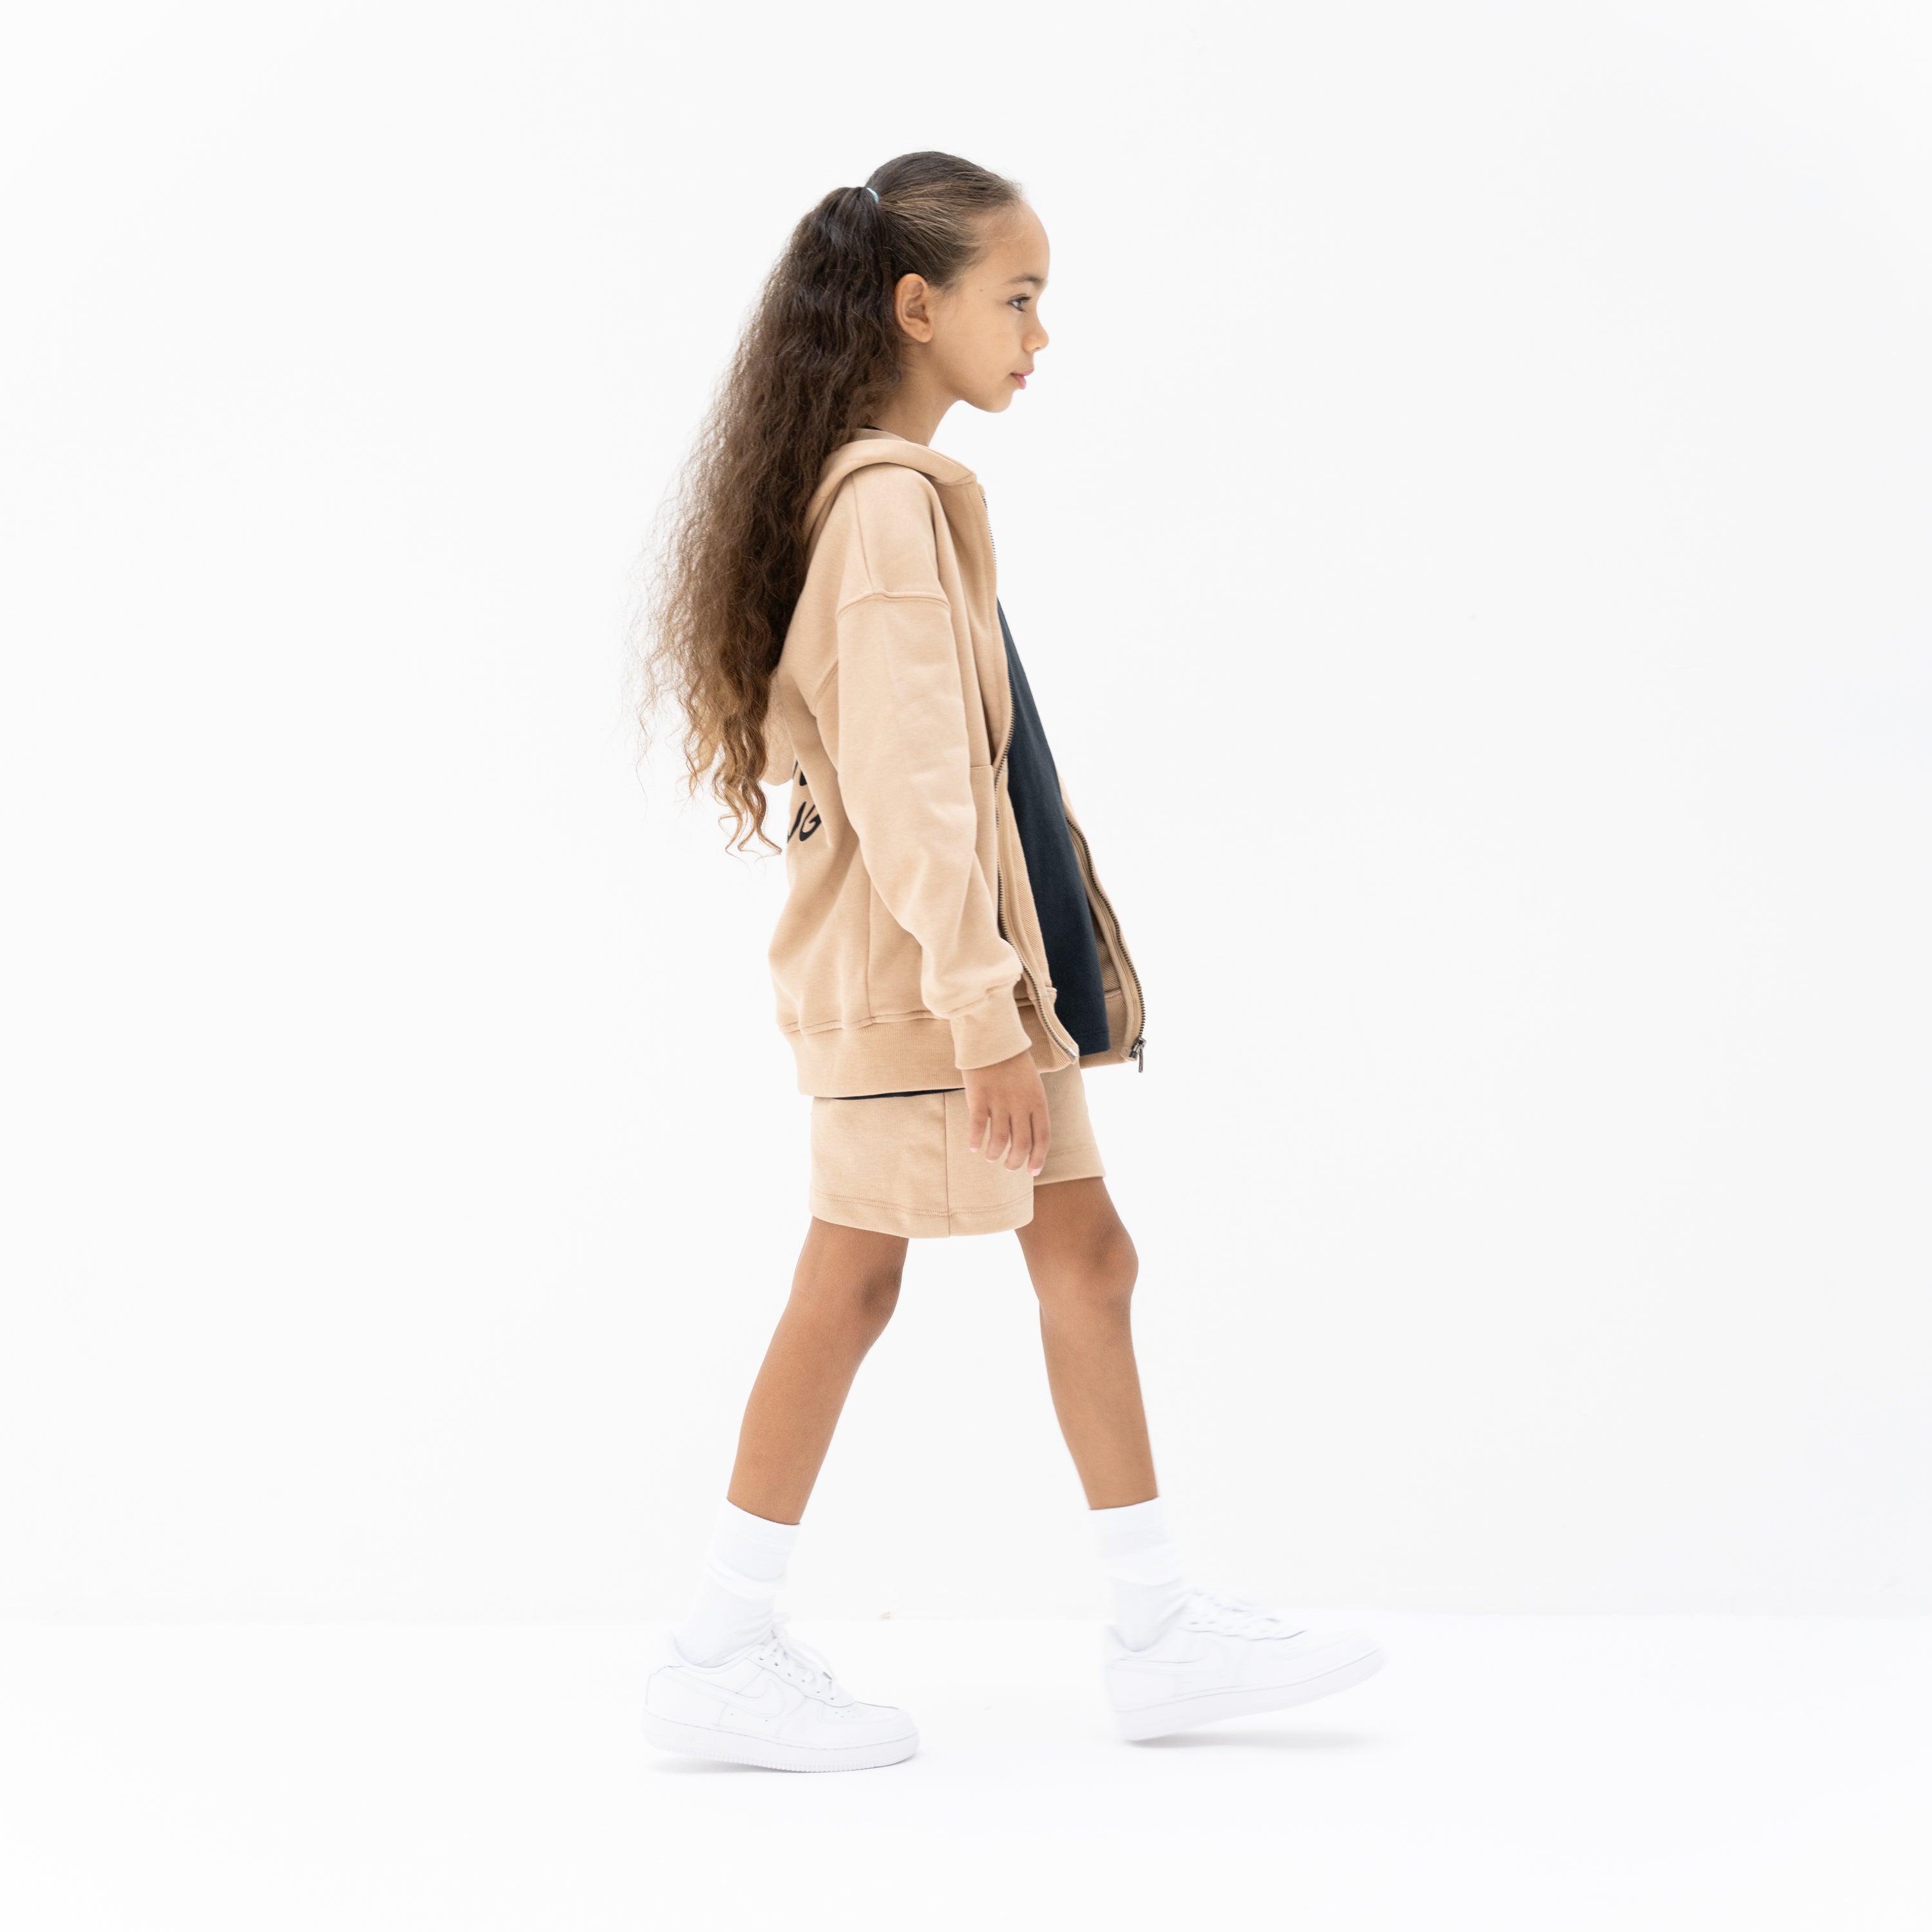 KIDD, @kidd.ae e-shop conceptual children’s brand genderless clothing hoodie shorts outfit set color sand Dubai